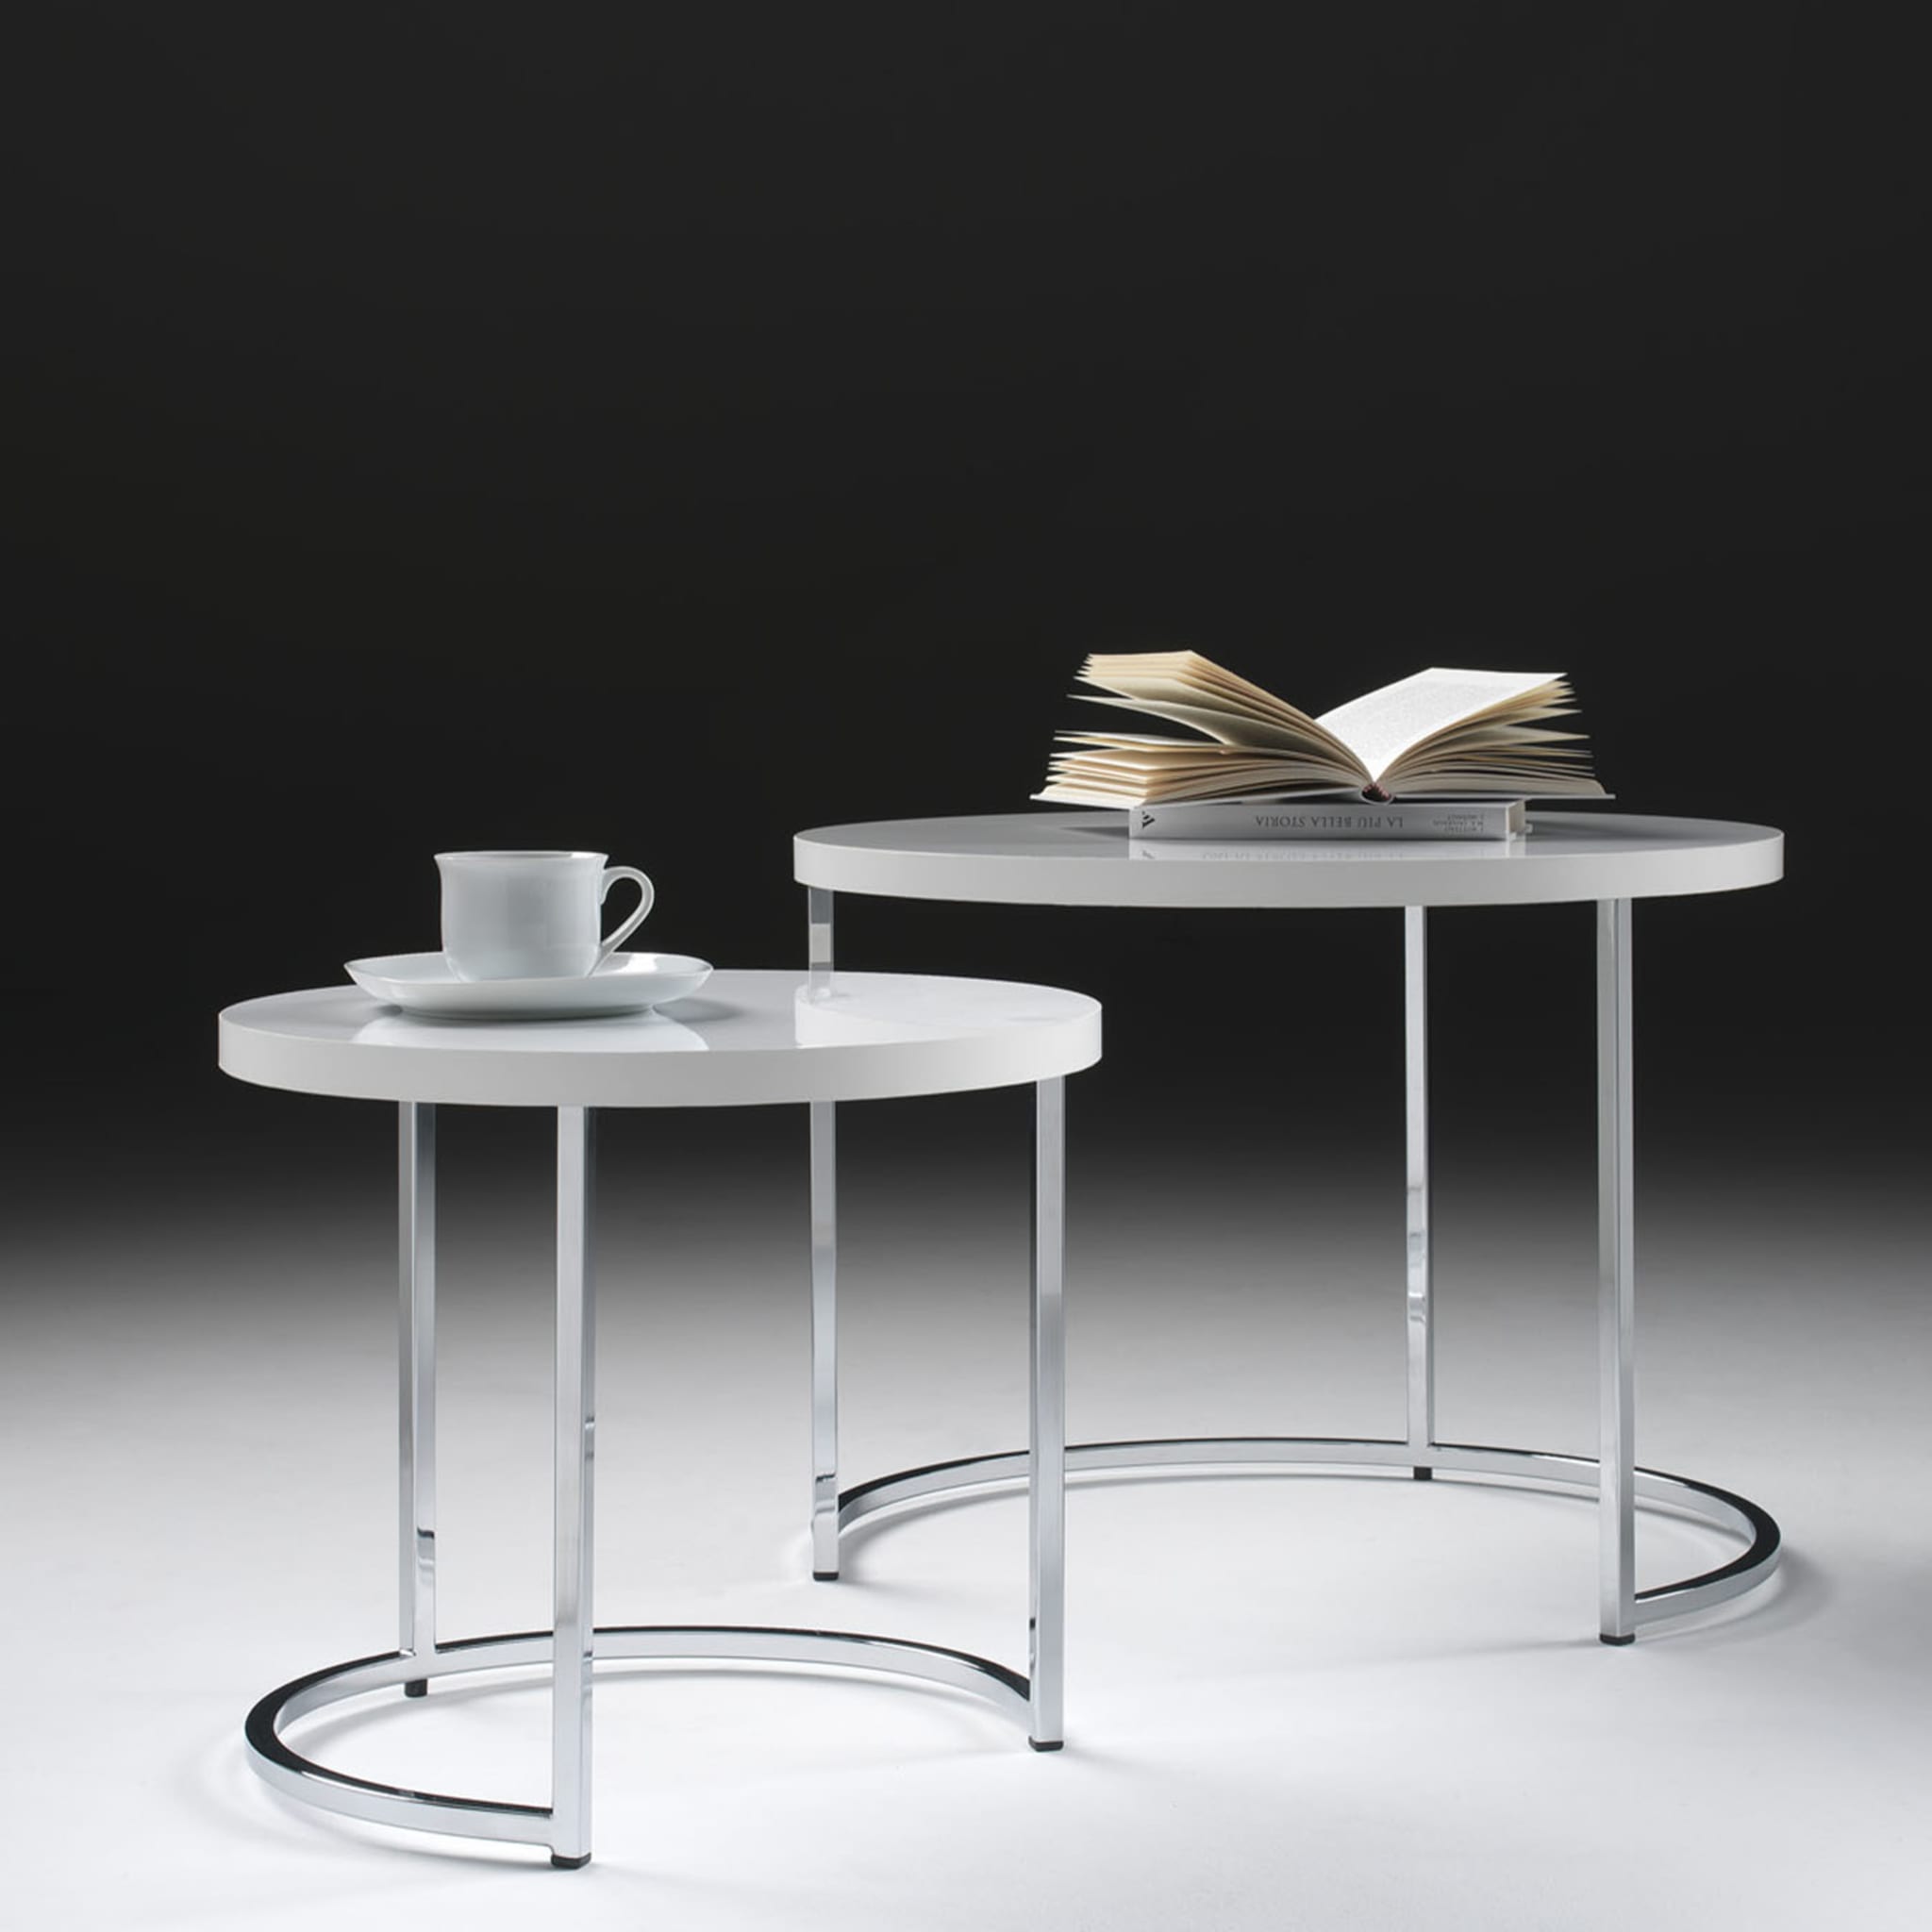 Cin Cin Set of 2 Wooden Coffee Tables - Alternative view 1